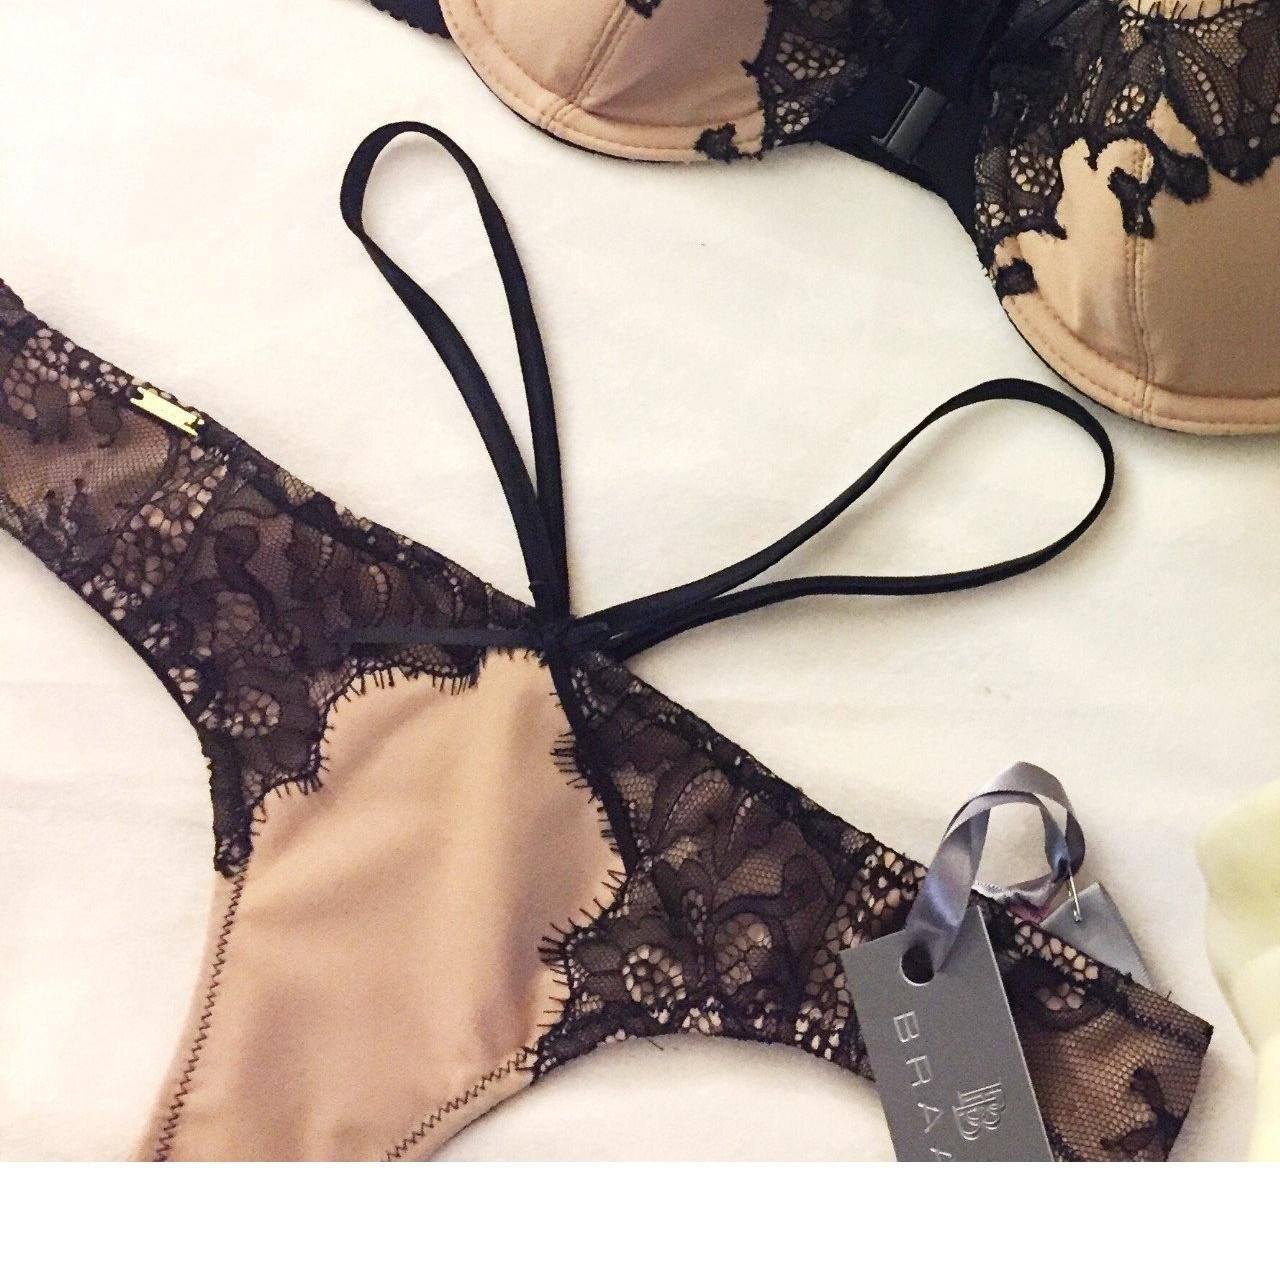 Lingerie Set - Julianna Kai Allister Bra Lace Applique & Mikayla Saleem Thong In Nude/Black With Bondage Straps